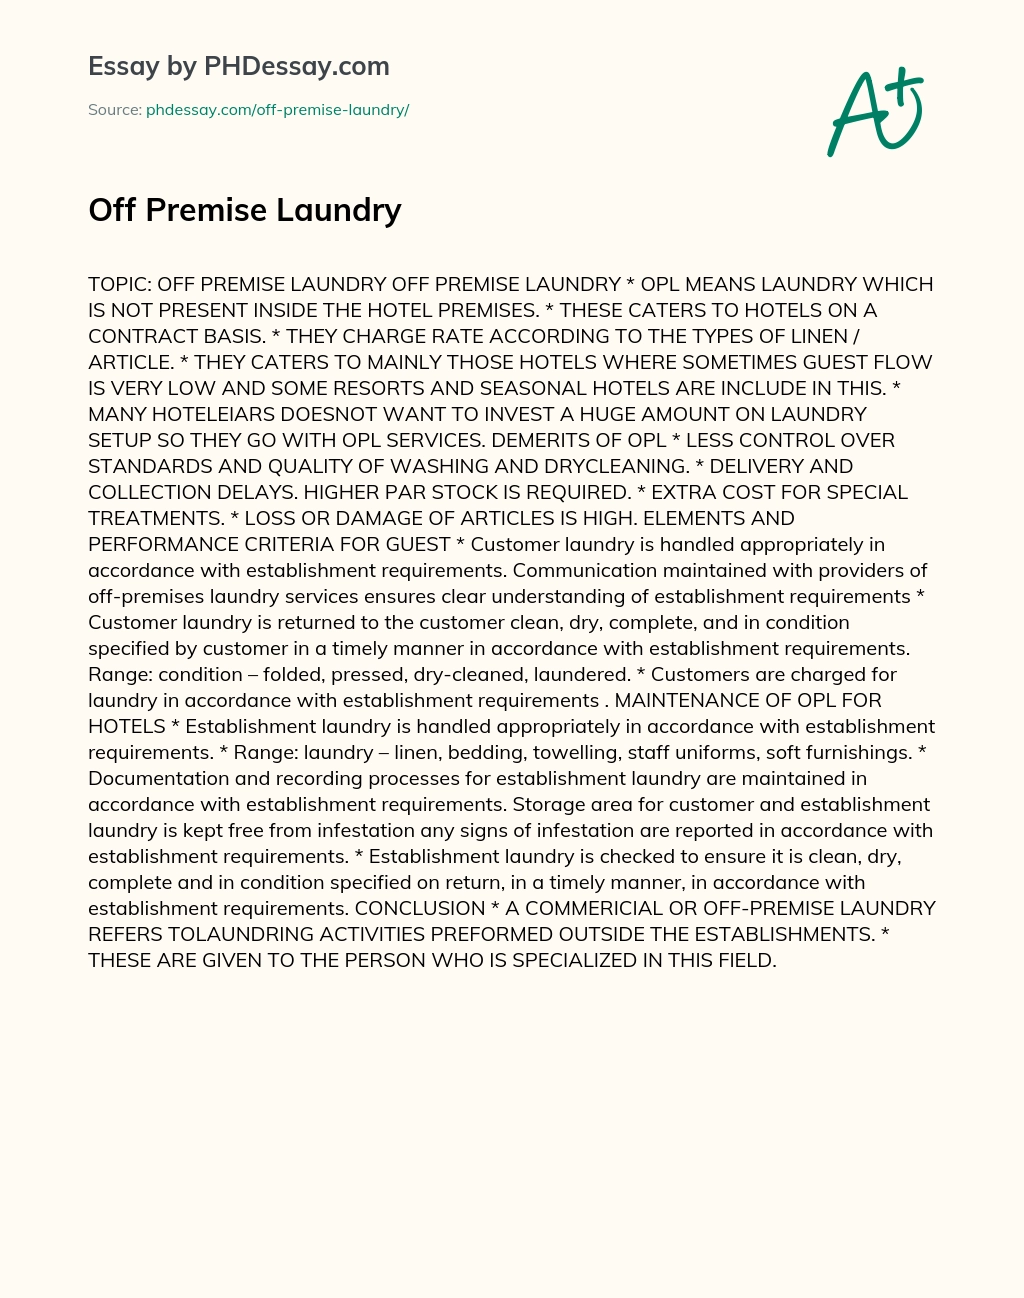 Off Premise Laundry essay